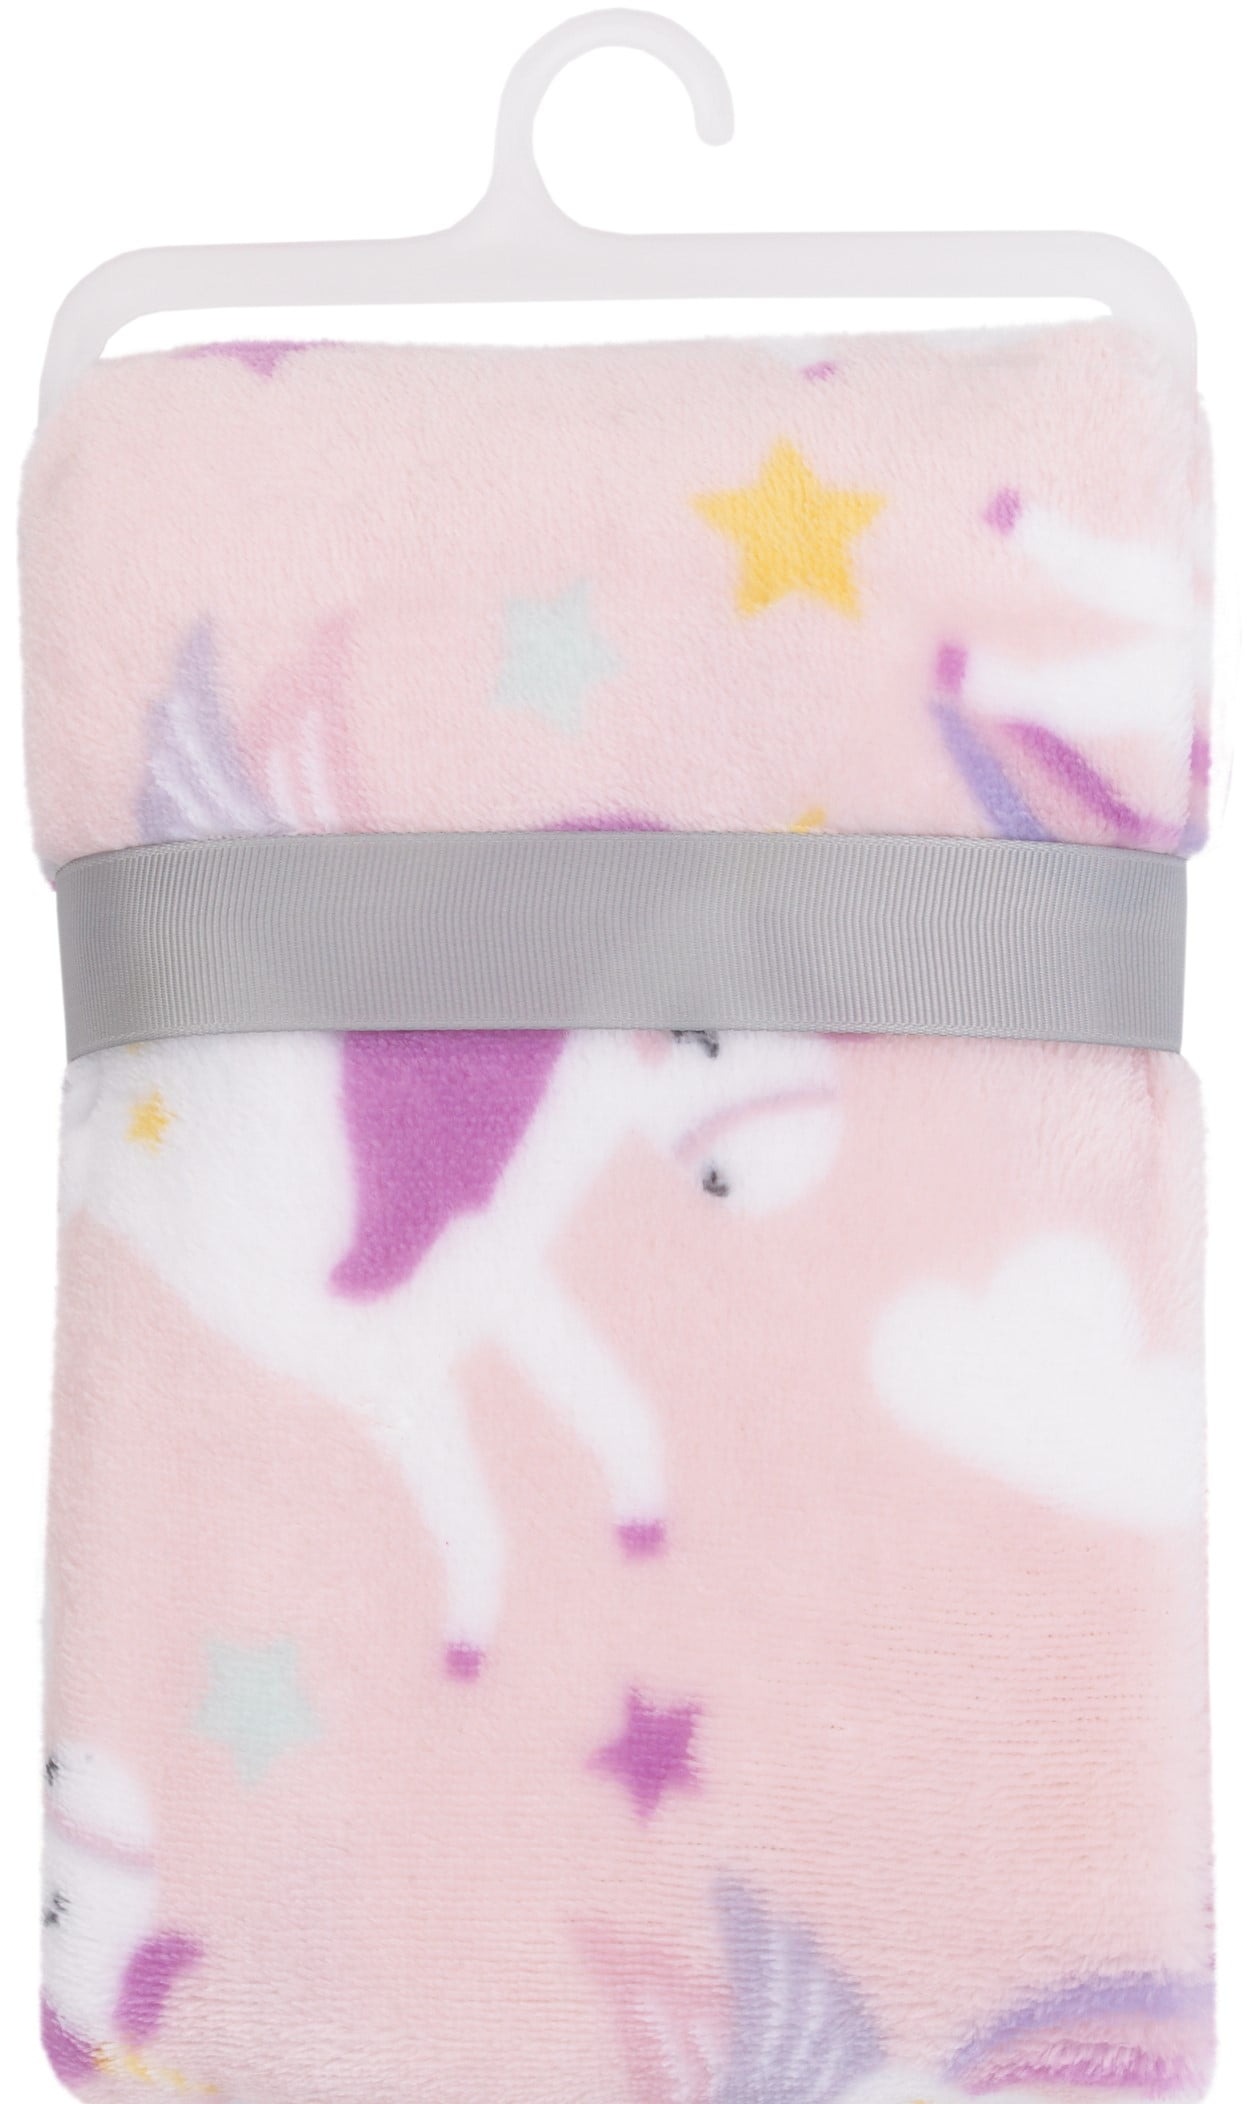 Nattou Comfort Blanket Unicorn Jade, Nina, Jade and Lili, 27 x 27 x 5 cm,  Beige/Pink